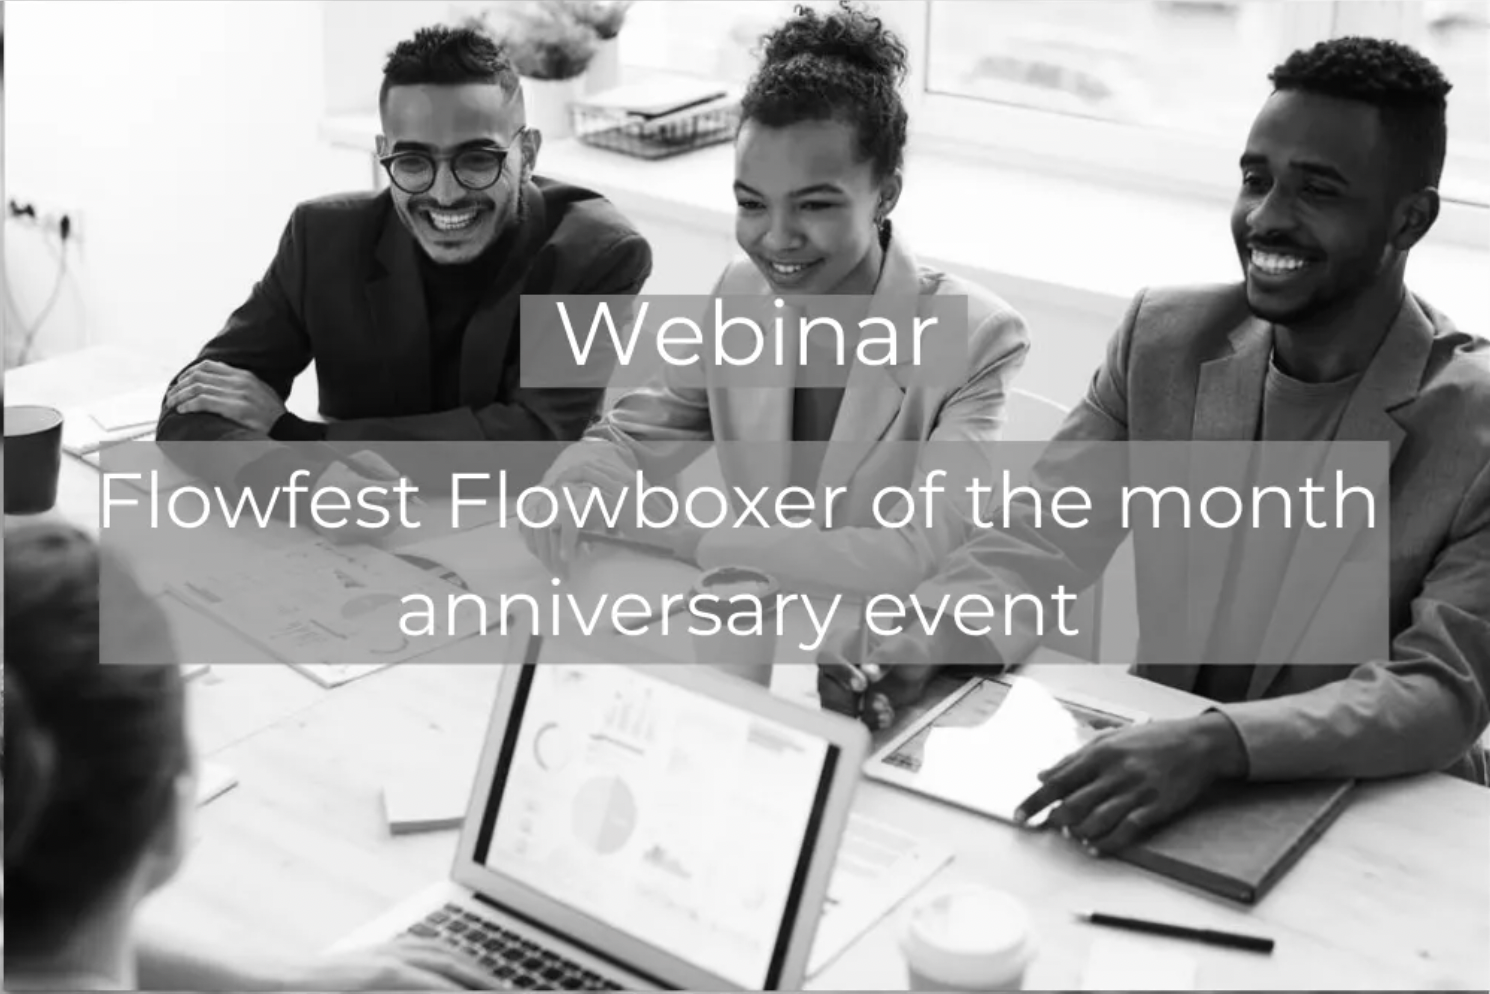 Flowfest FOTM anniversary event